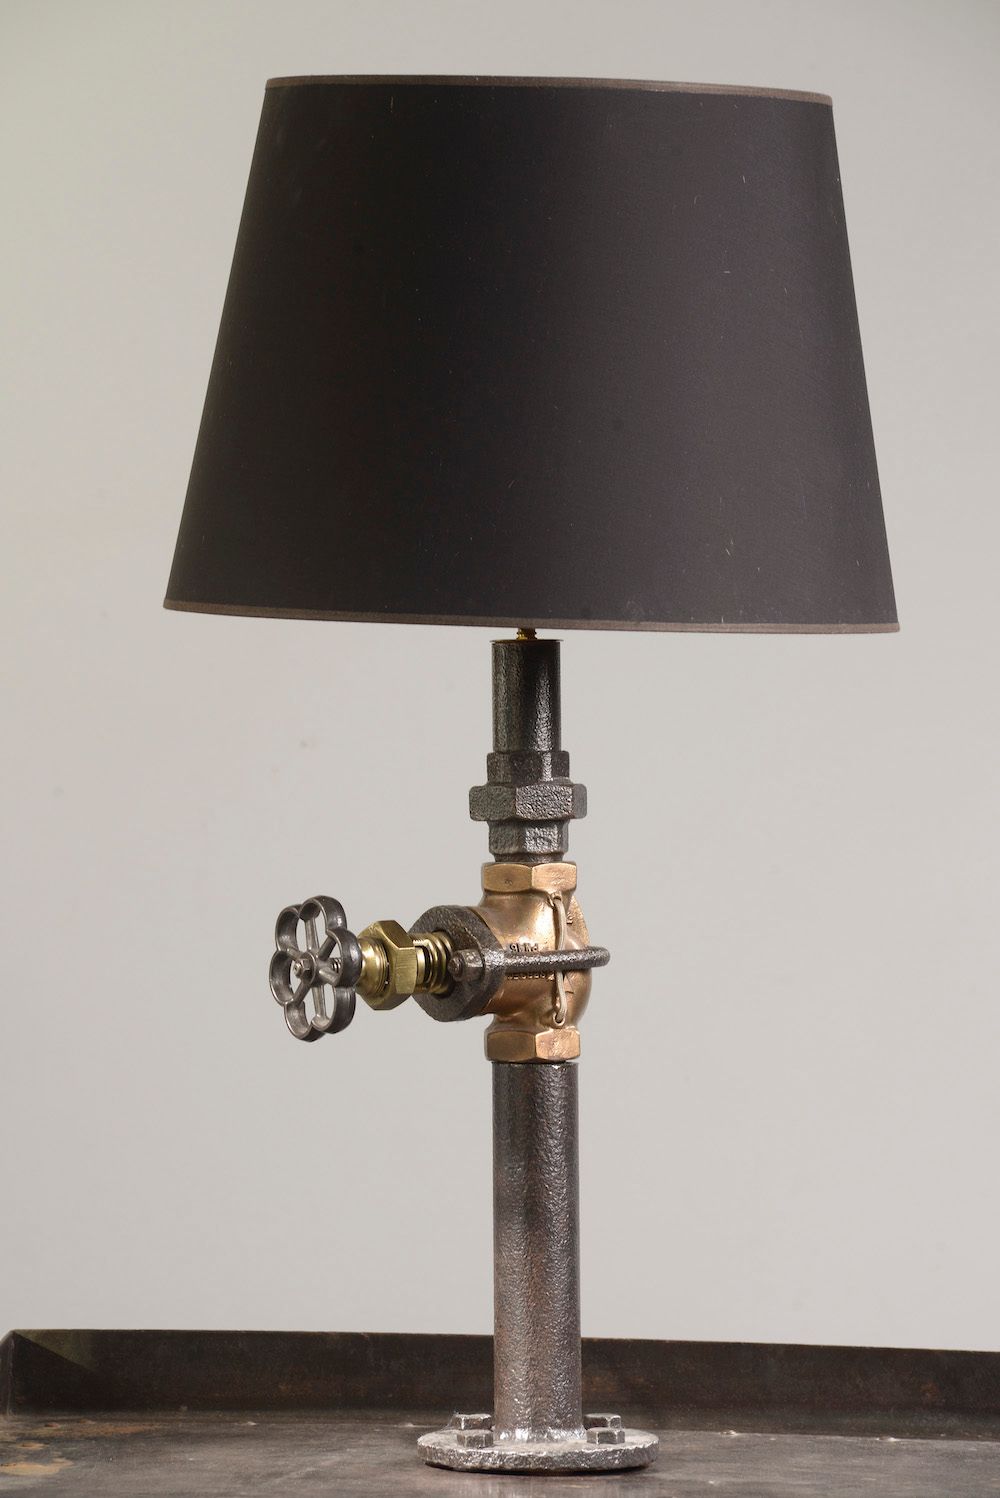 Null 工业风格的台灯，轴是由一个铜化的金属管和一个阀门（电动安装）形成的。

高度。高度：63厘米